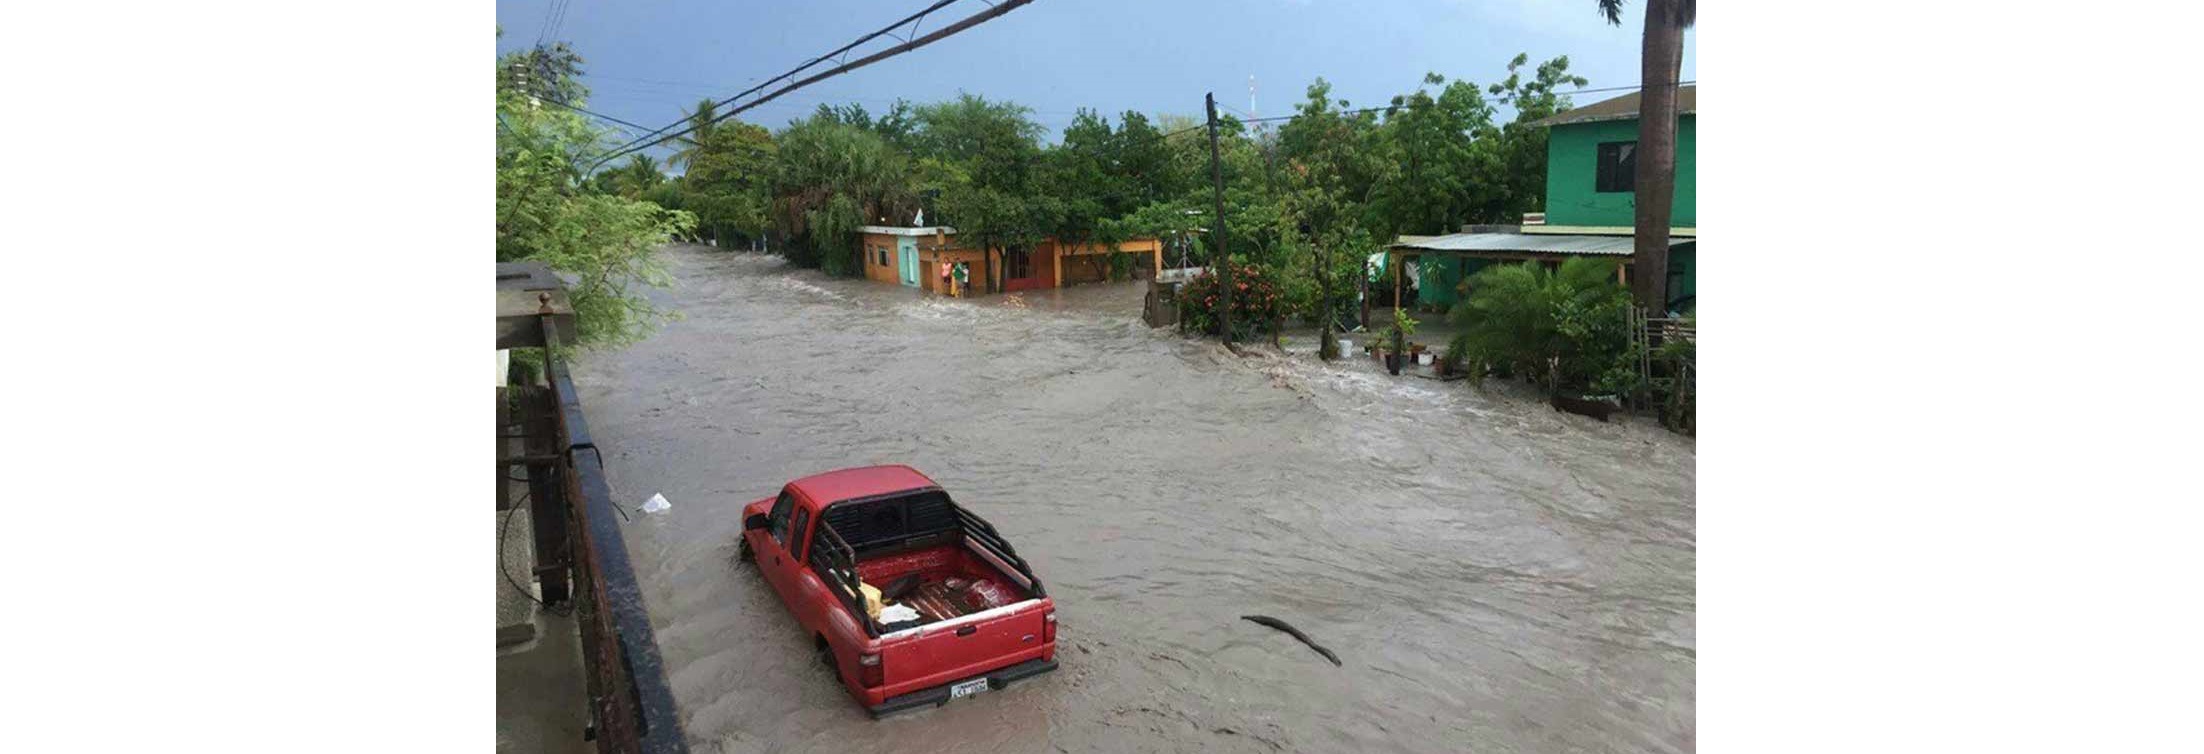 Fuertes lluvias convierten calles de Tamaulipas en ríos